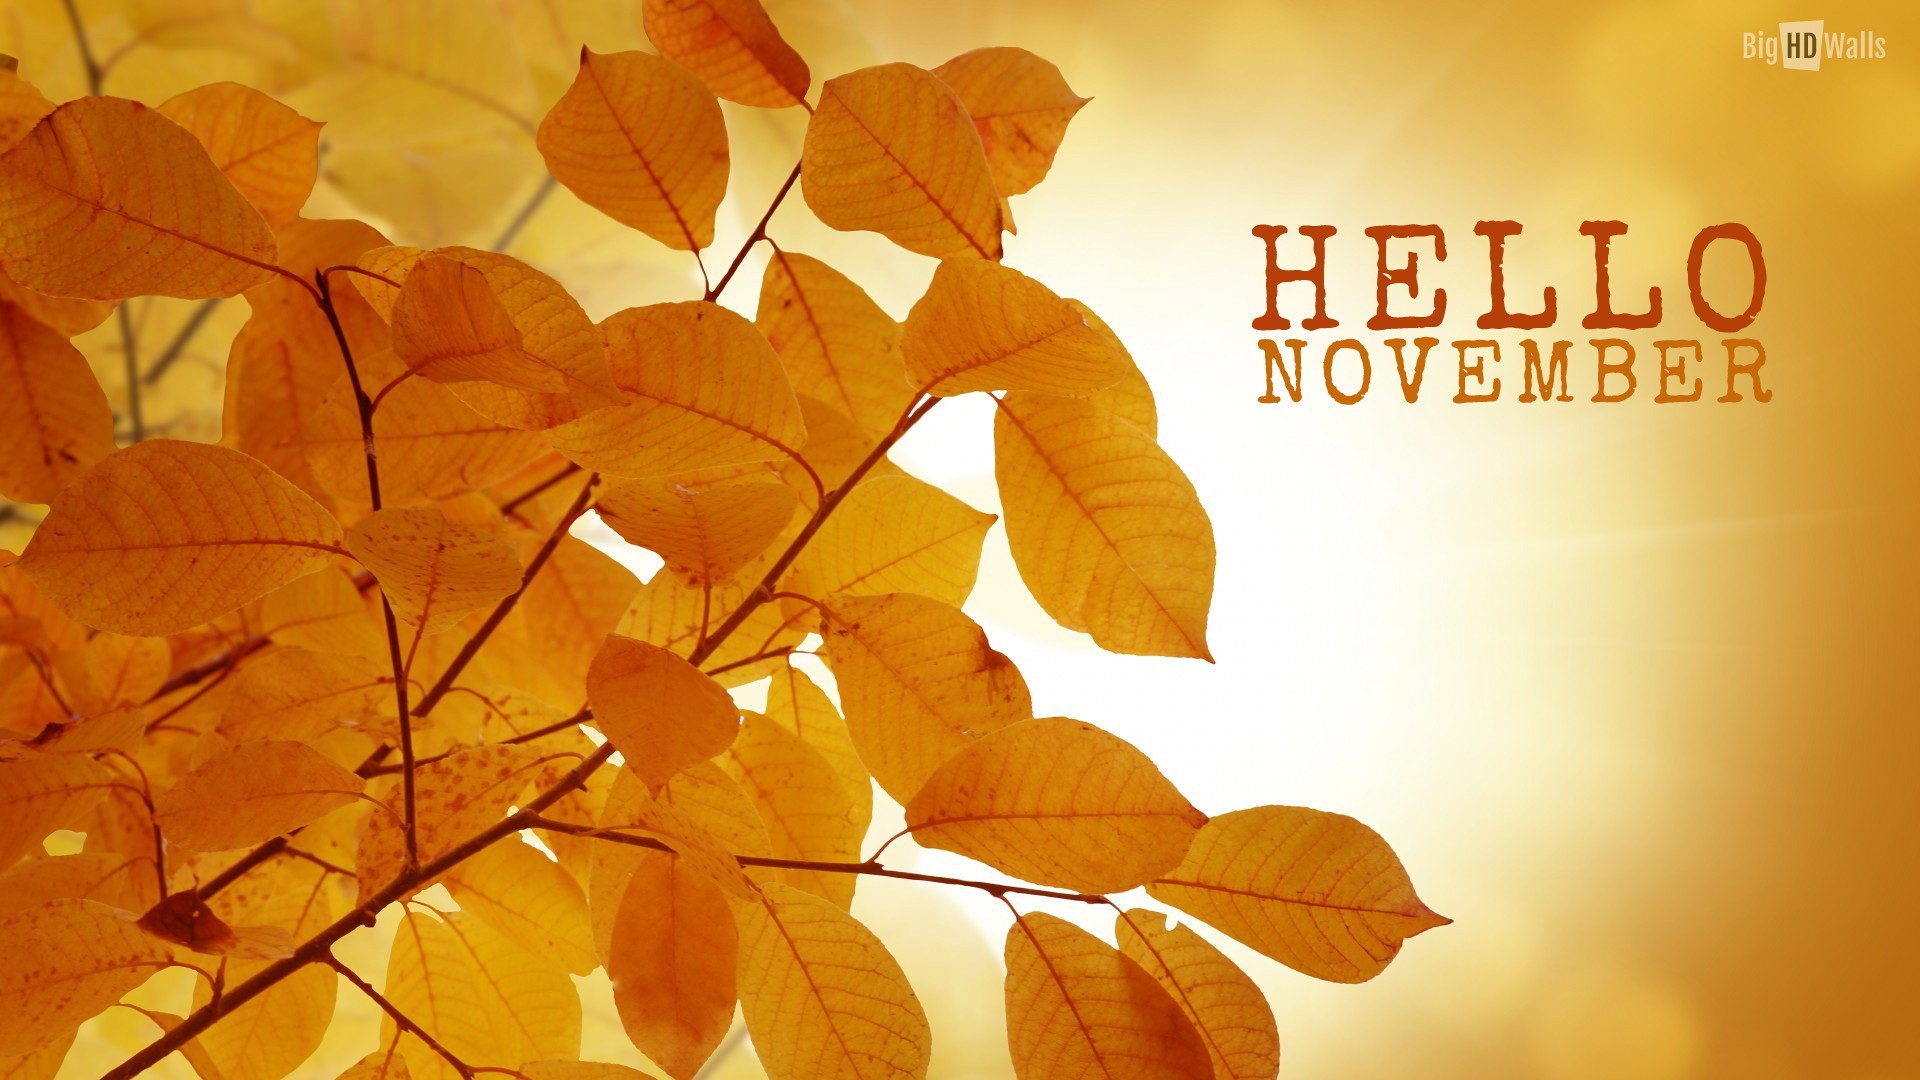 November Wallpaper ·① Download Free Awesome Hd Backgrounds For Desktop